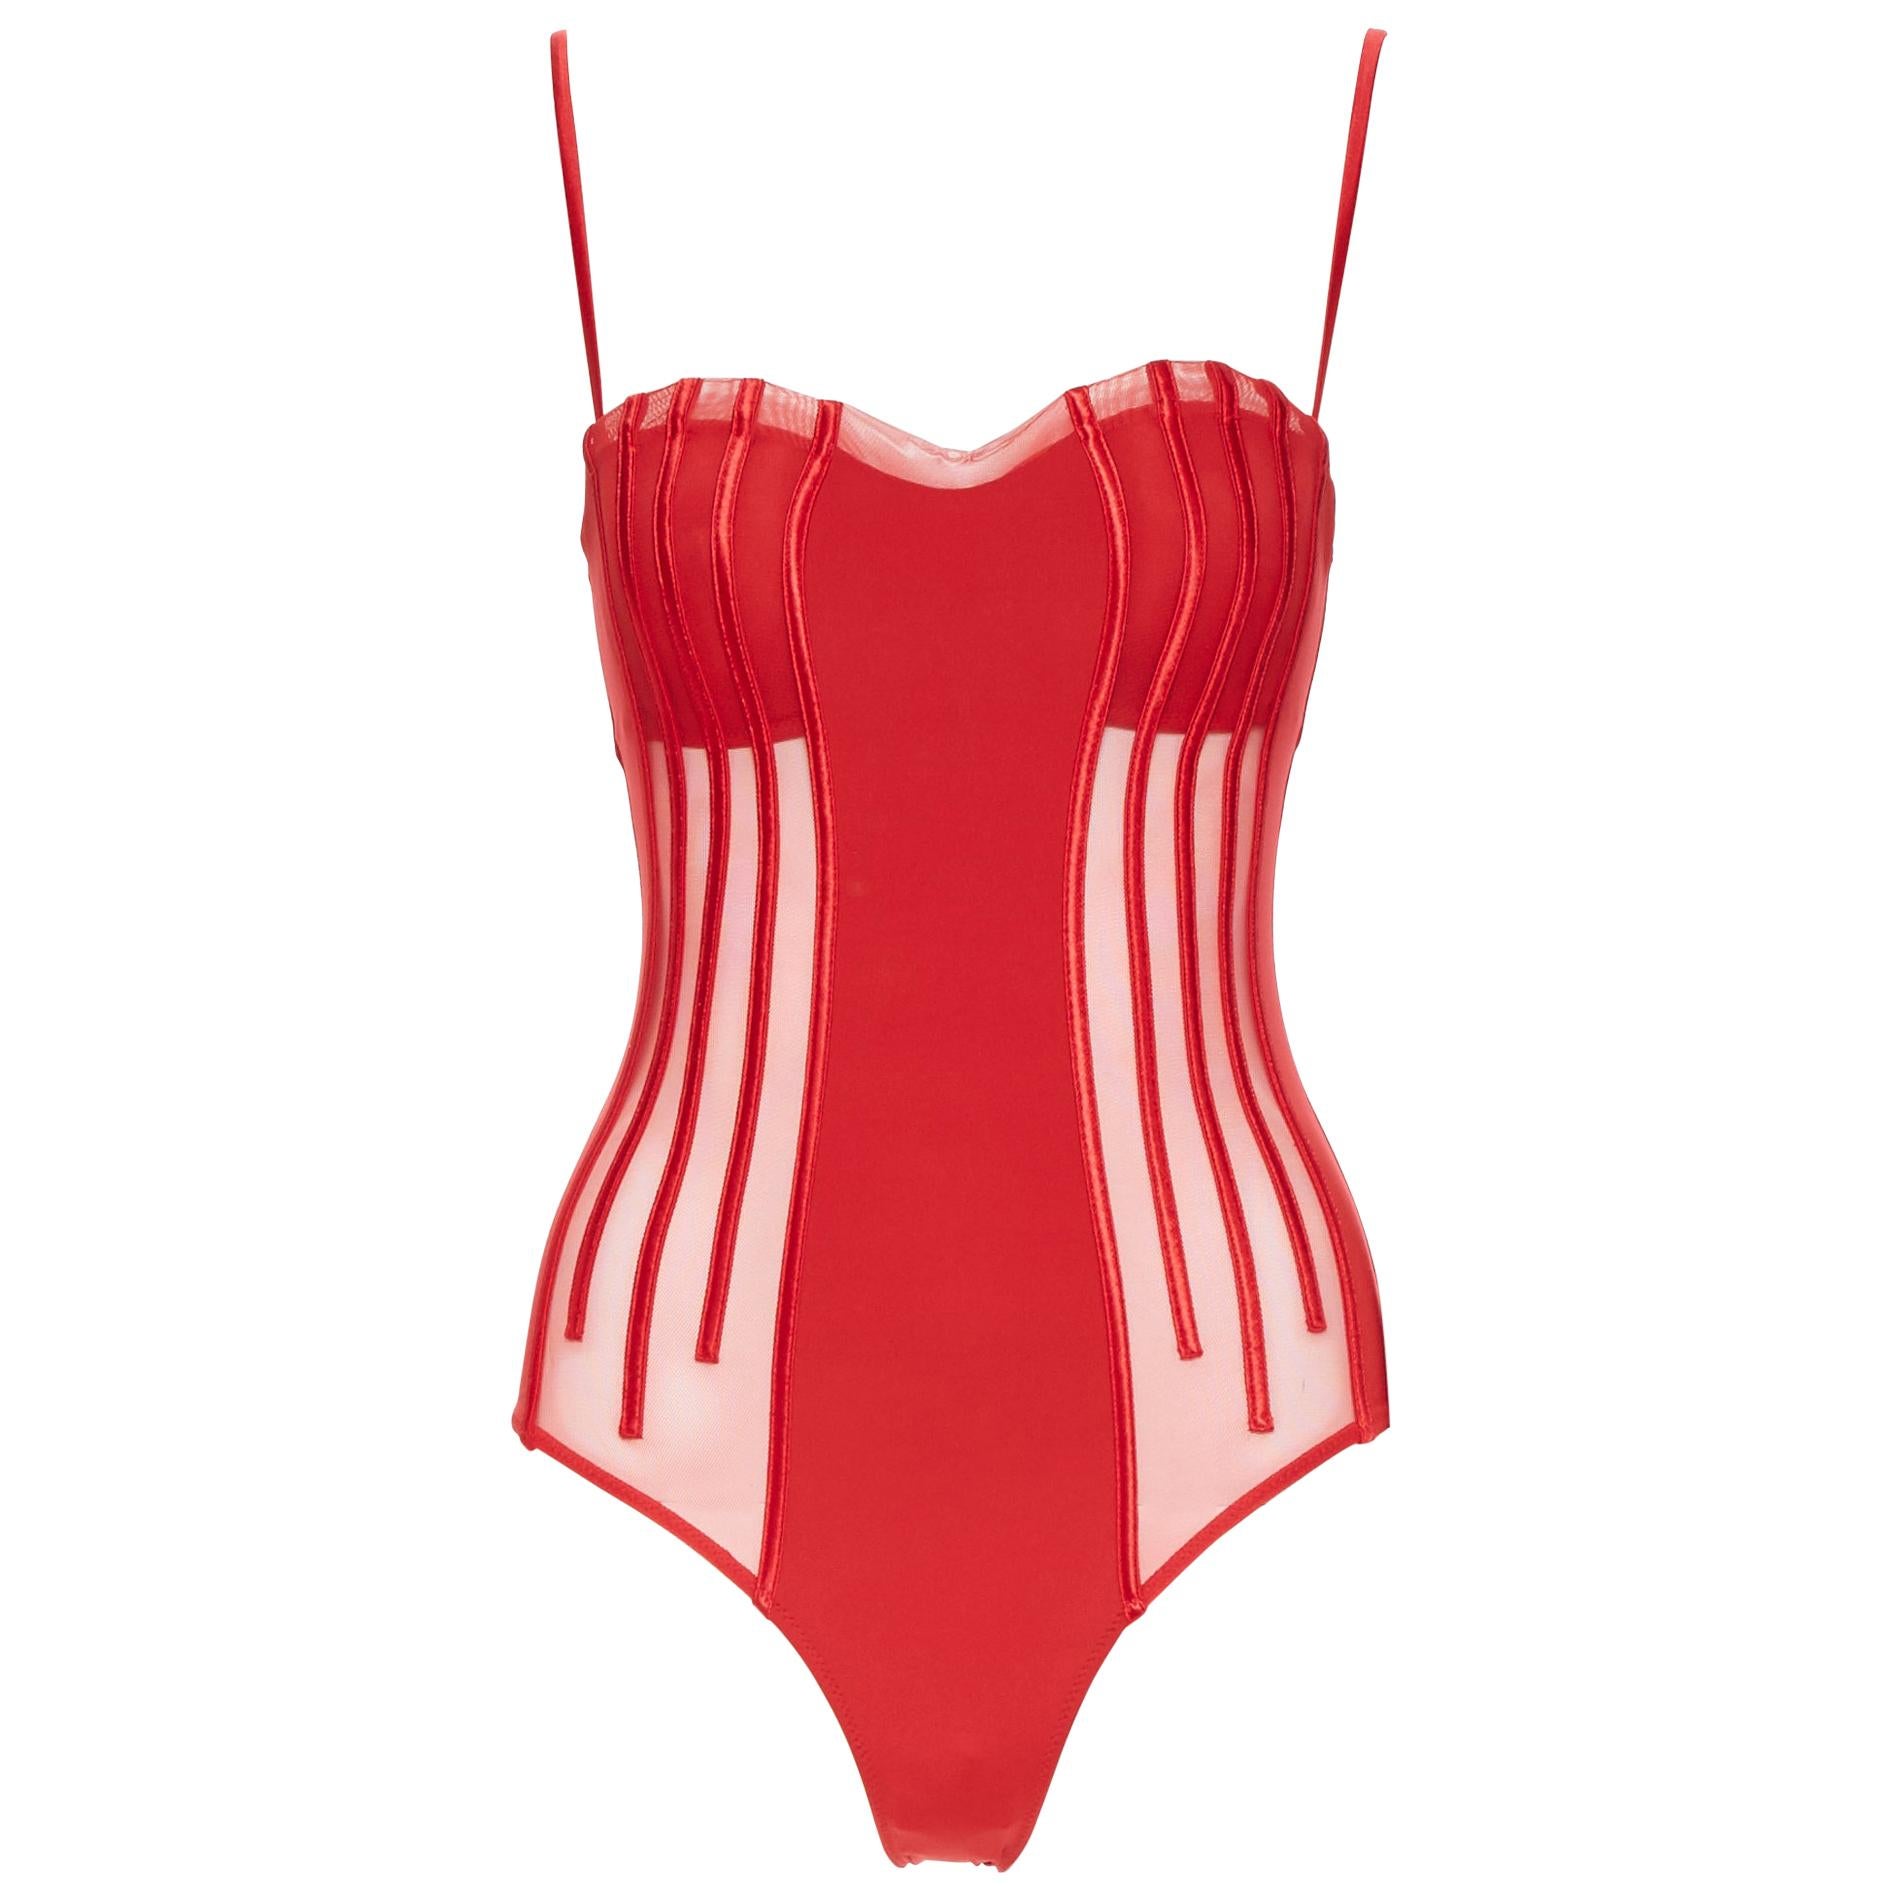 new LA PERLA Graphique Couture red boned sheer body monokini swimsuit IT44B M